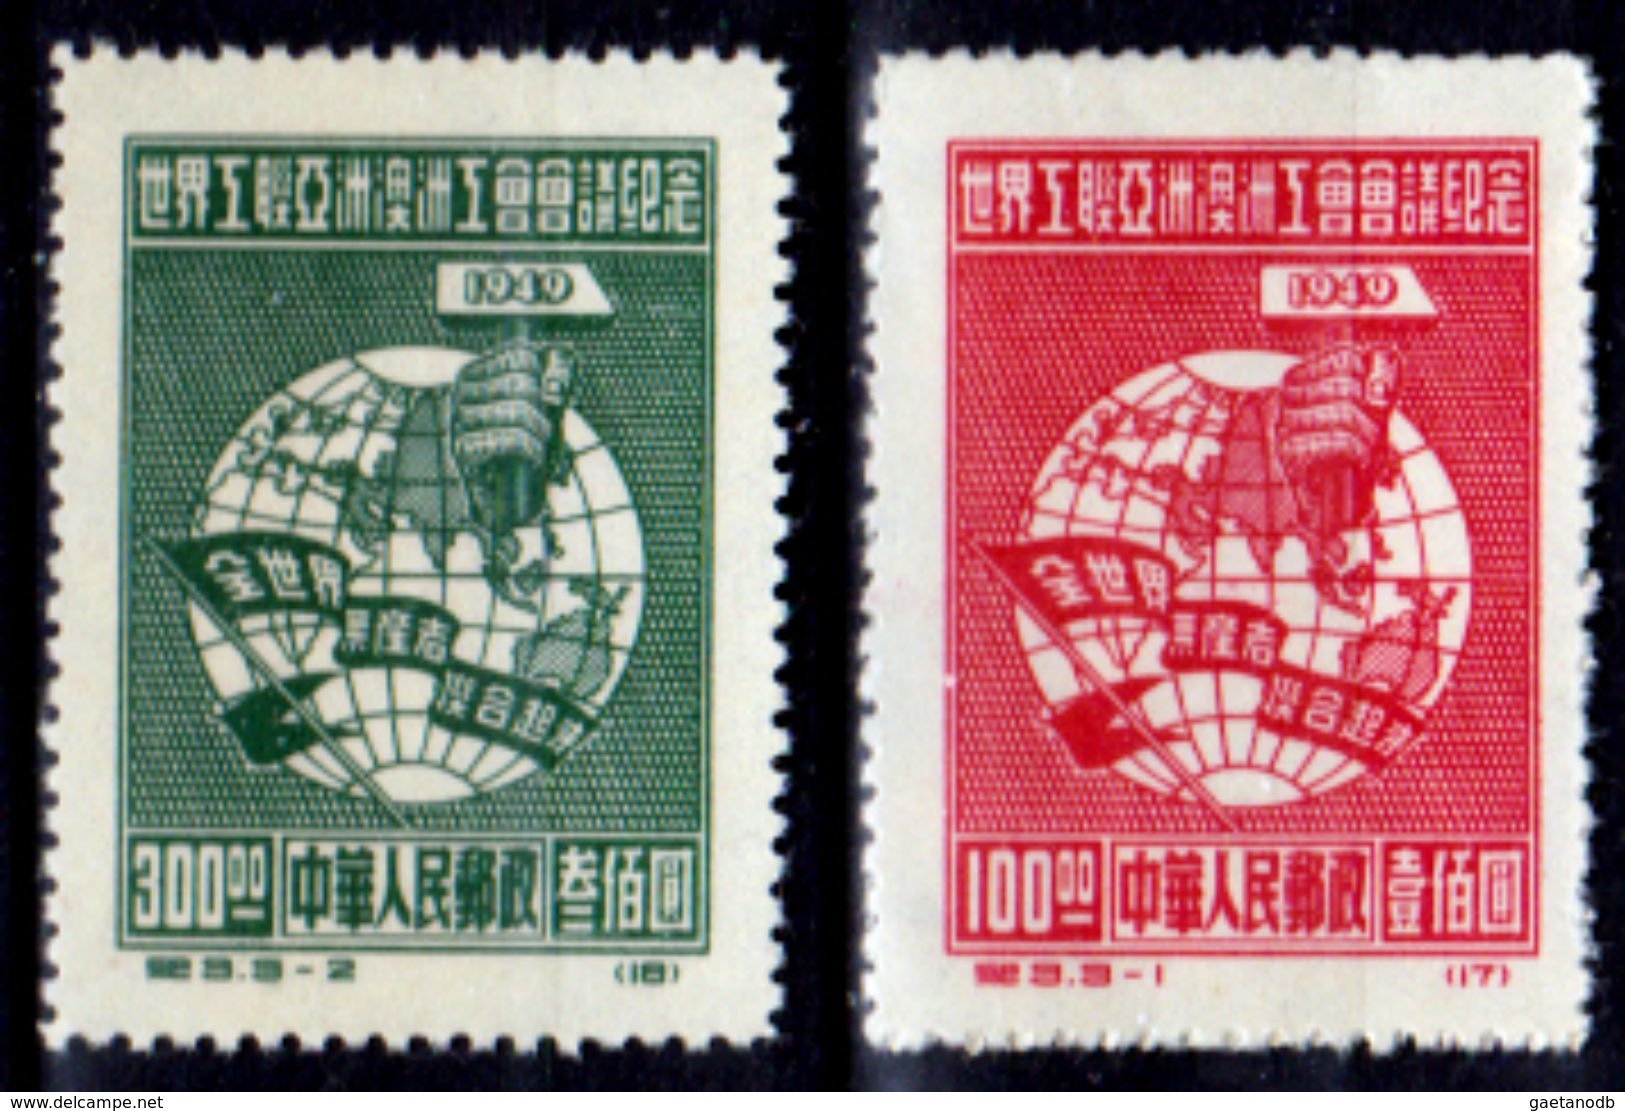 Cina-A-0101 - 1949 - Senza Difetti Occulti. - Official Reprints